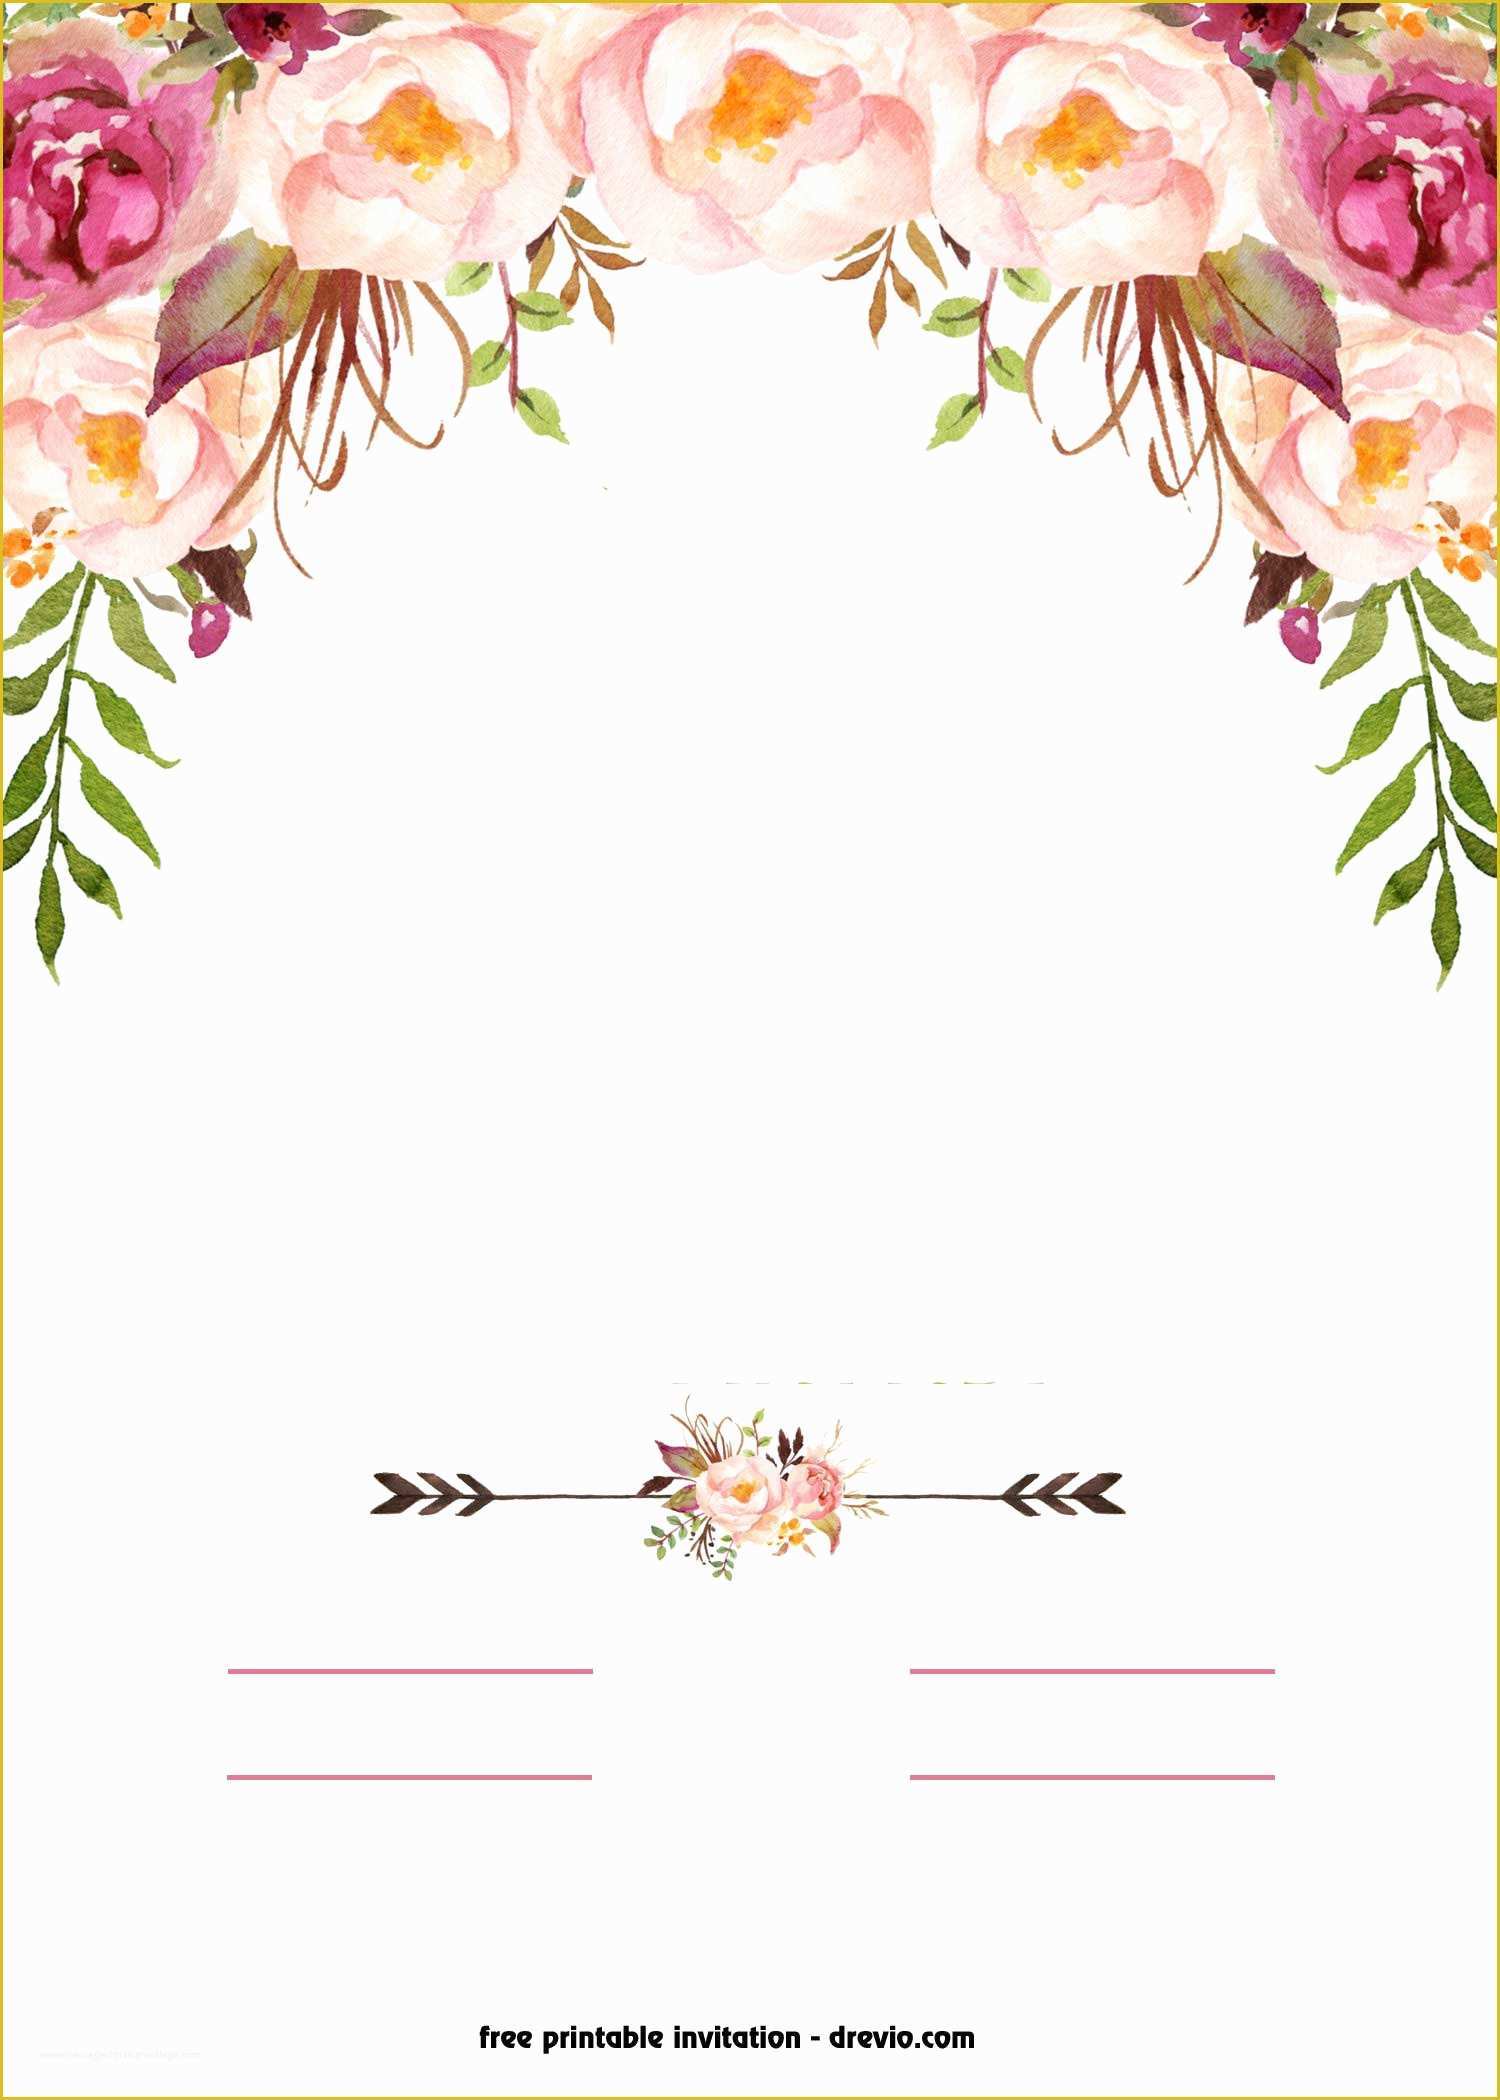 Flower Invitations Templates Free Of Free Printable Boho Chic Flower